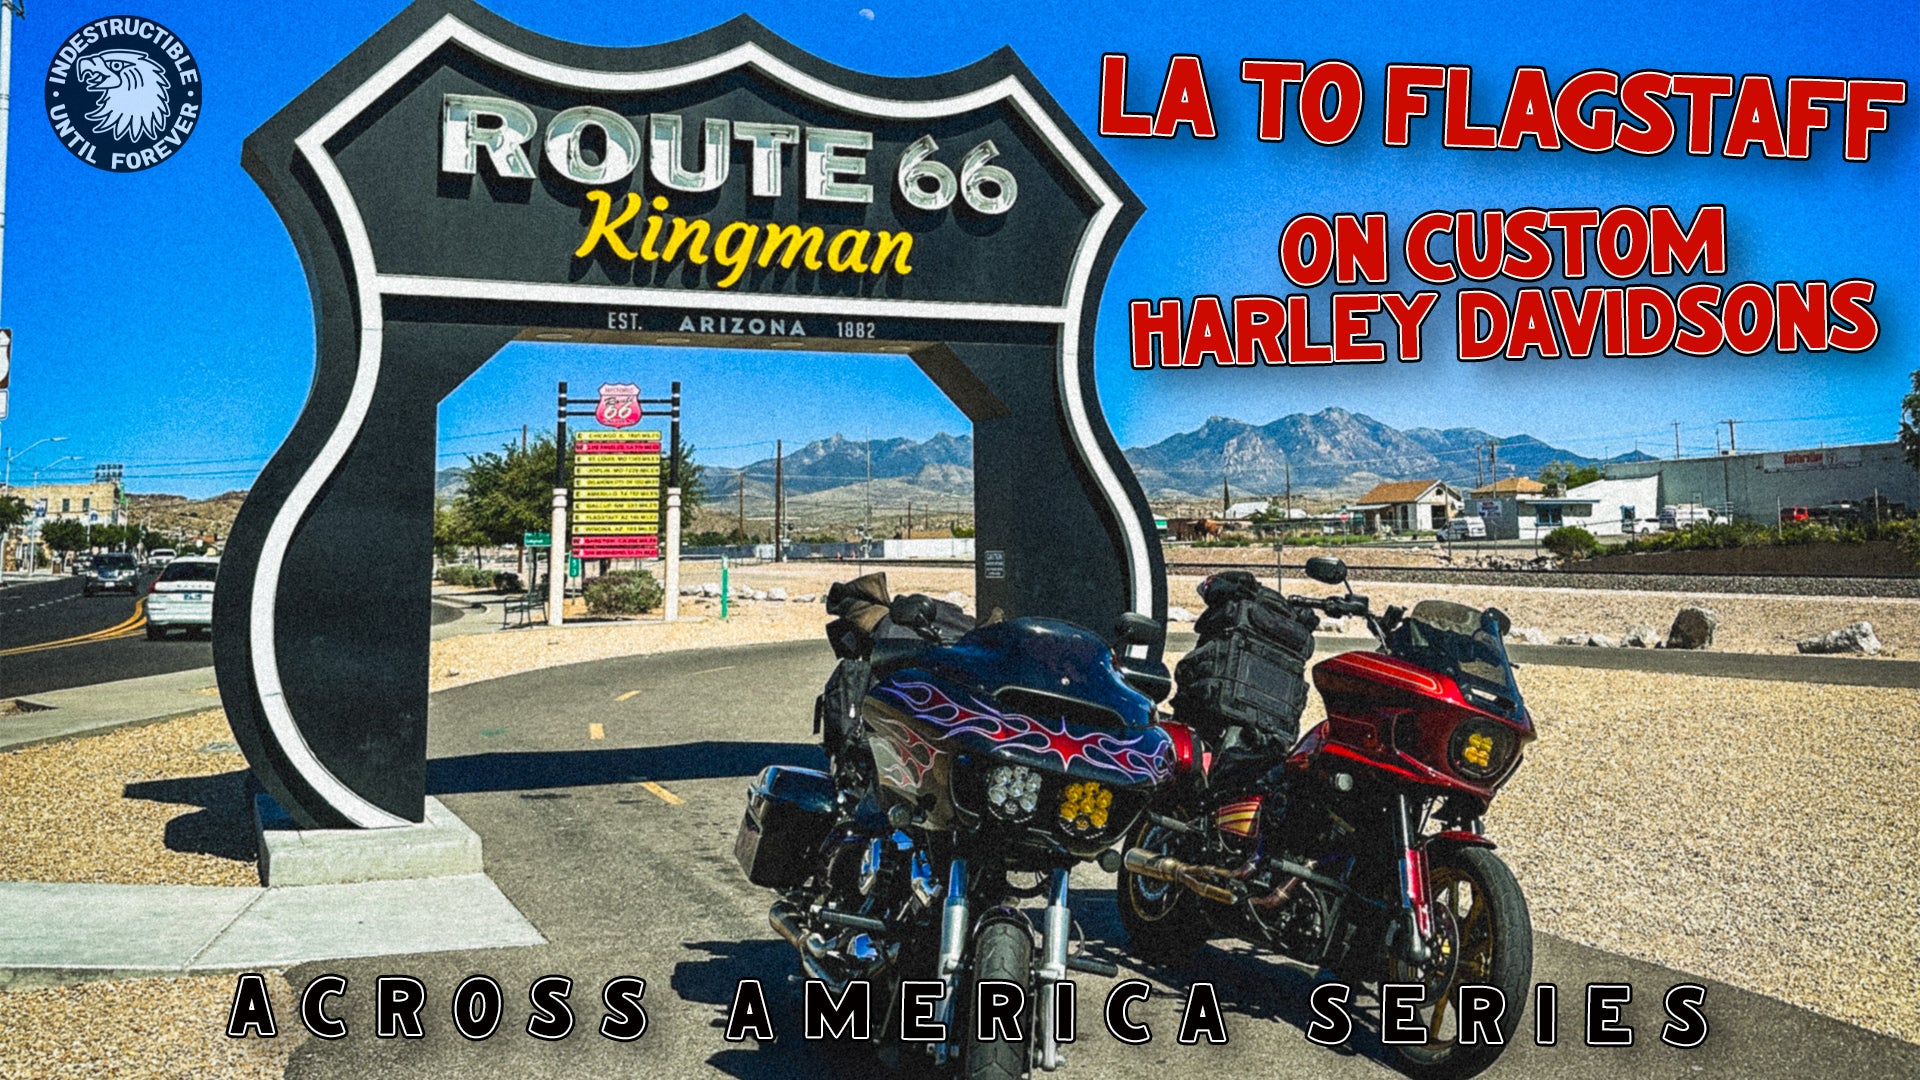 Across America On Custom Harley-Davidsons | LA to Flagstaff Via Route 66